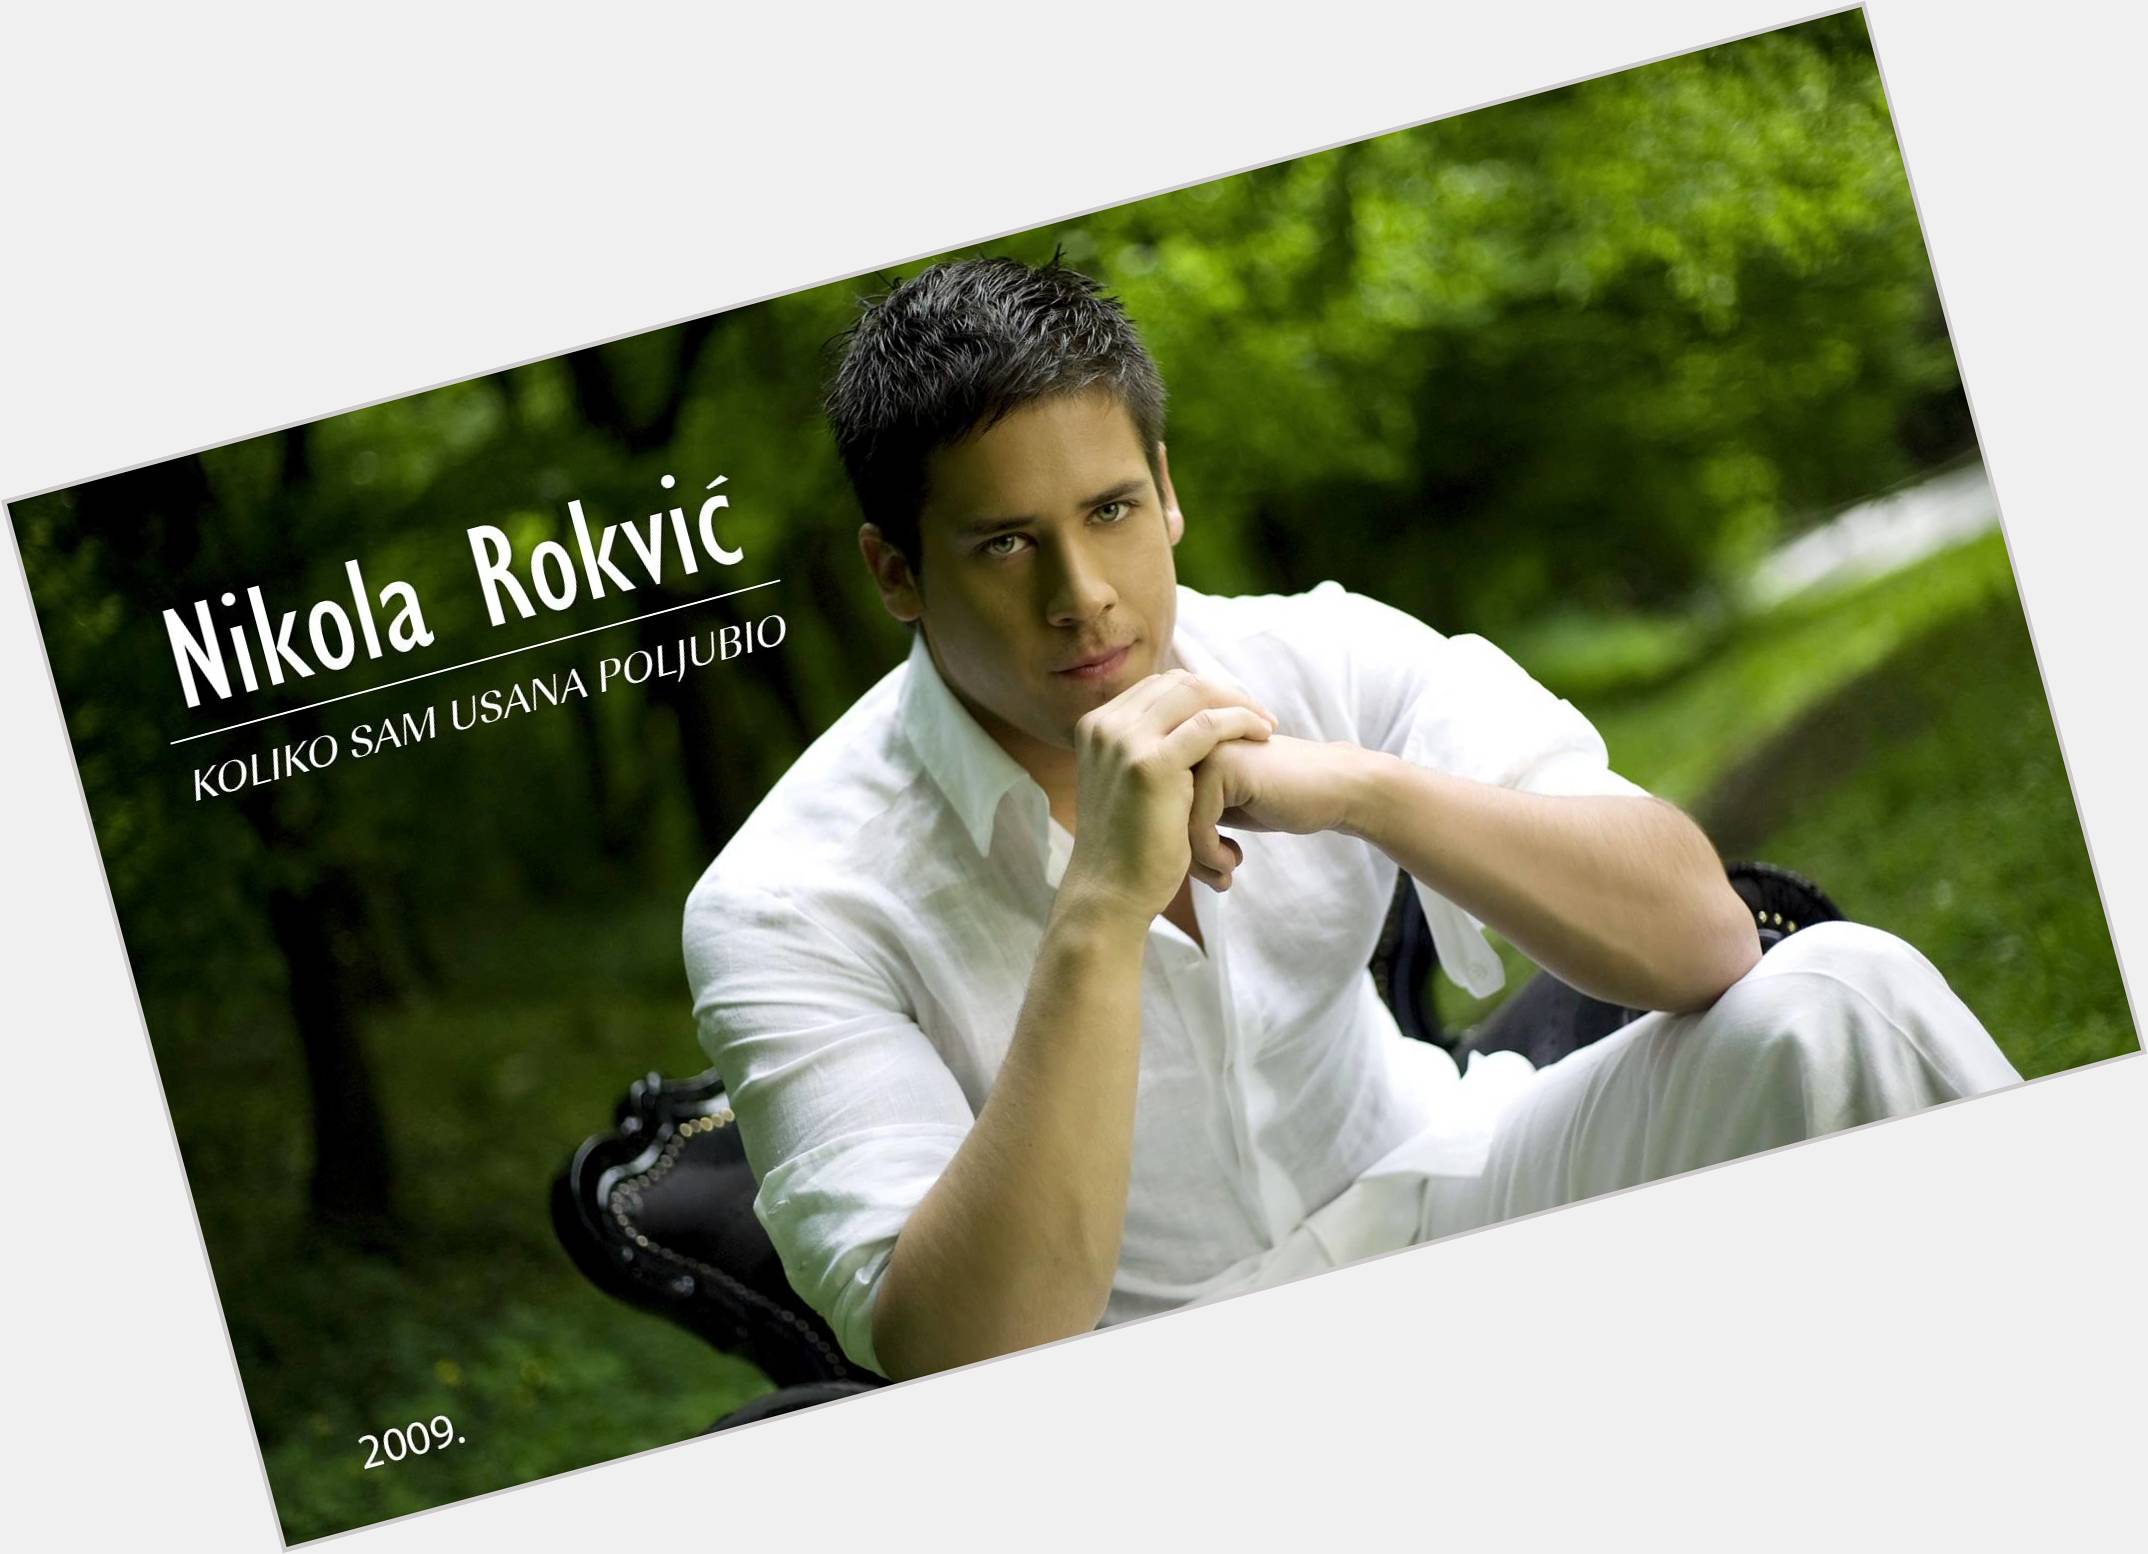 Nikola Rokvic Athletic body,  black hair & hairstyles